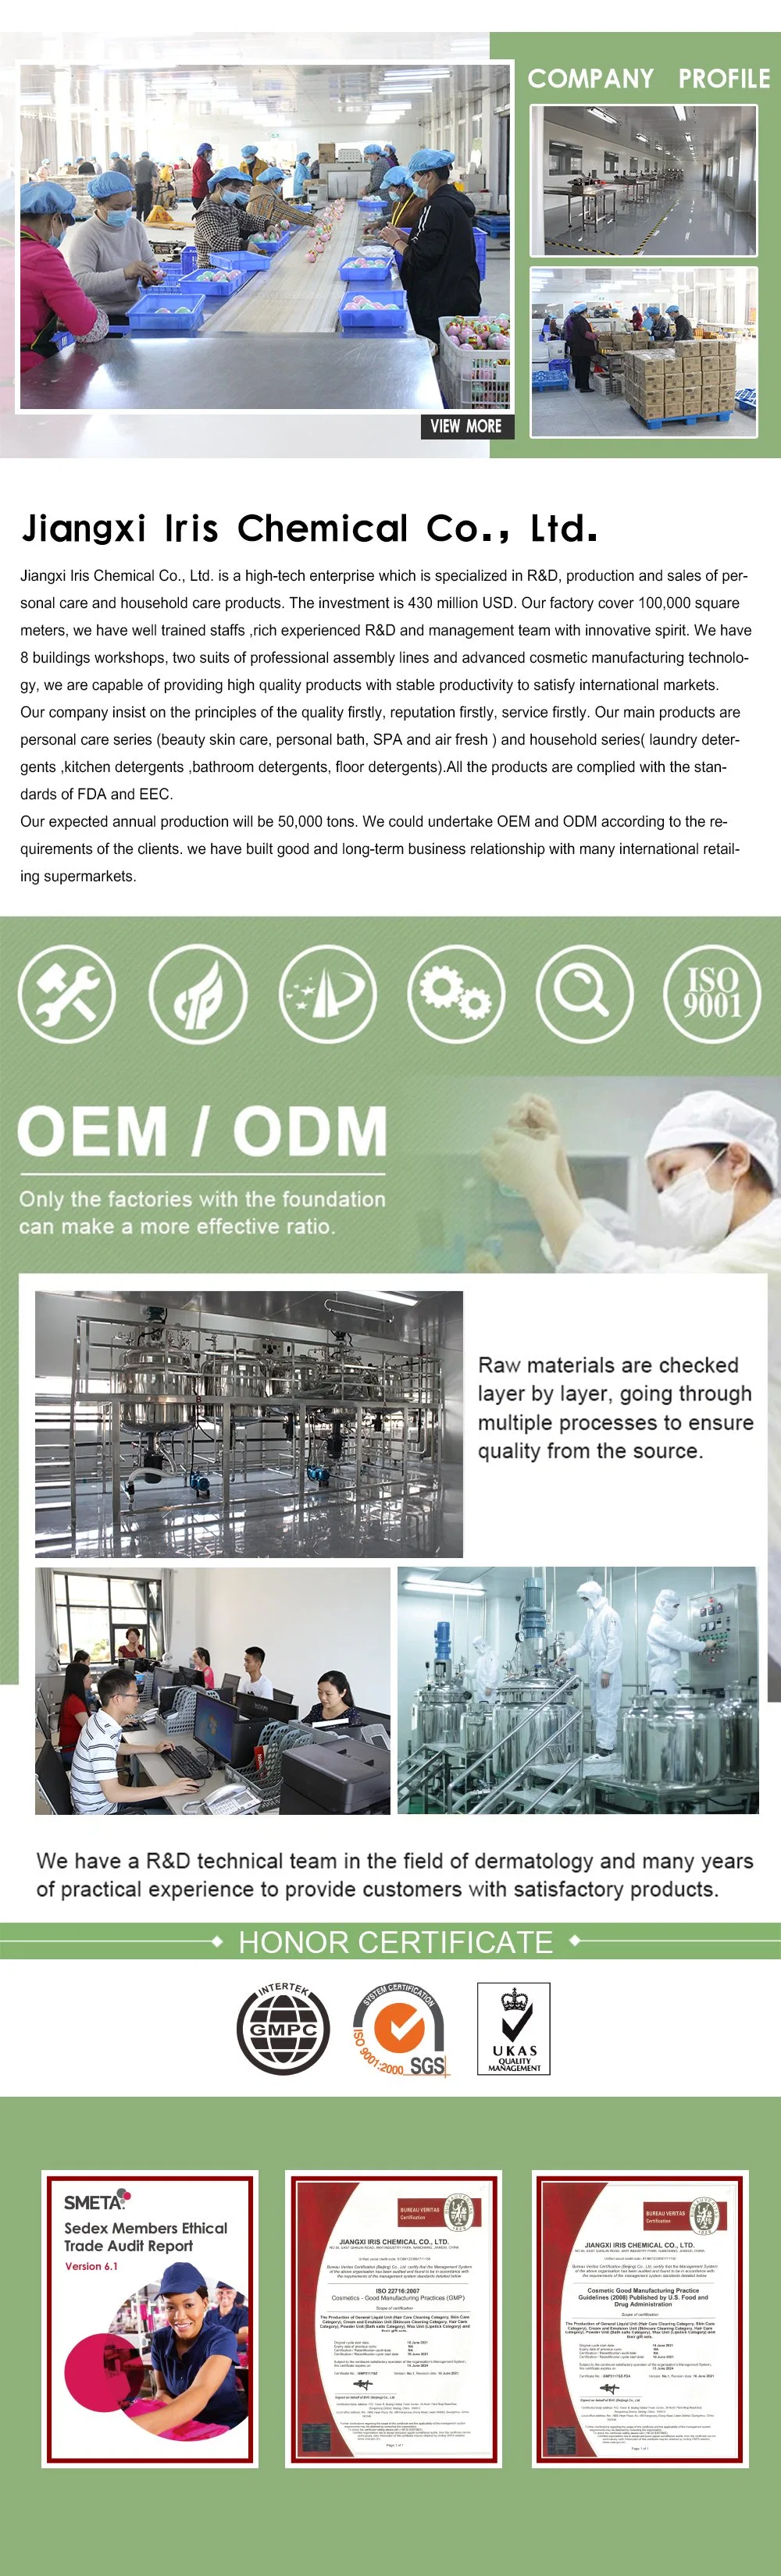 OEM &amp; ODM Supplier Wholesale Vitamin E Bath Kit Set Hand Cream